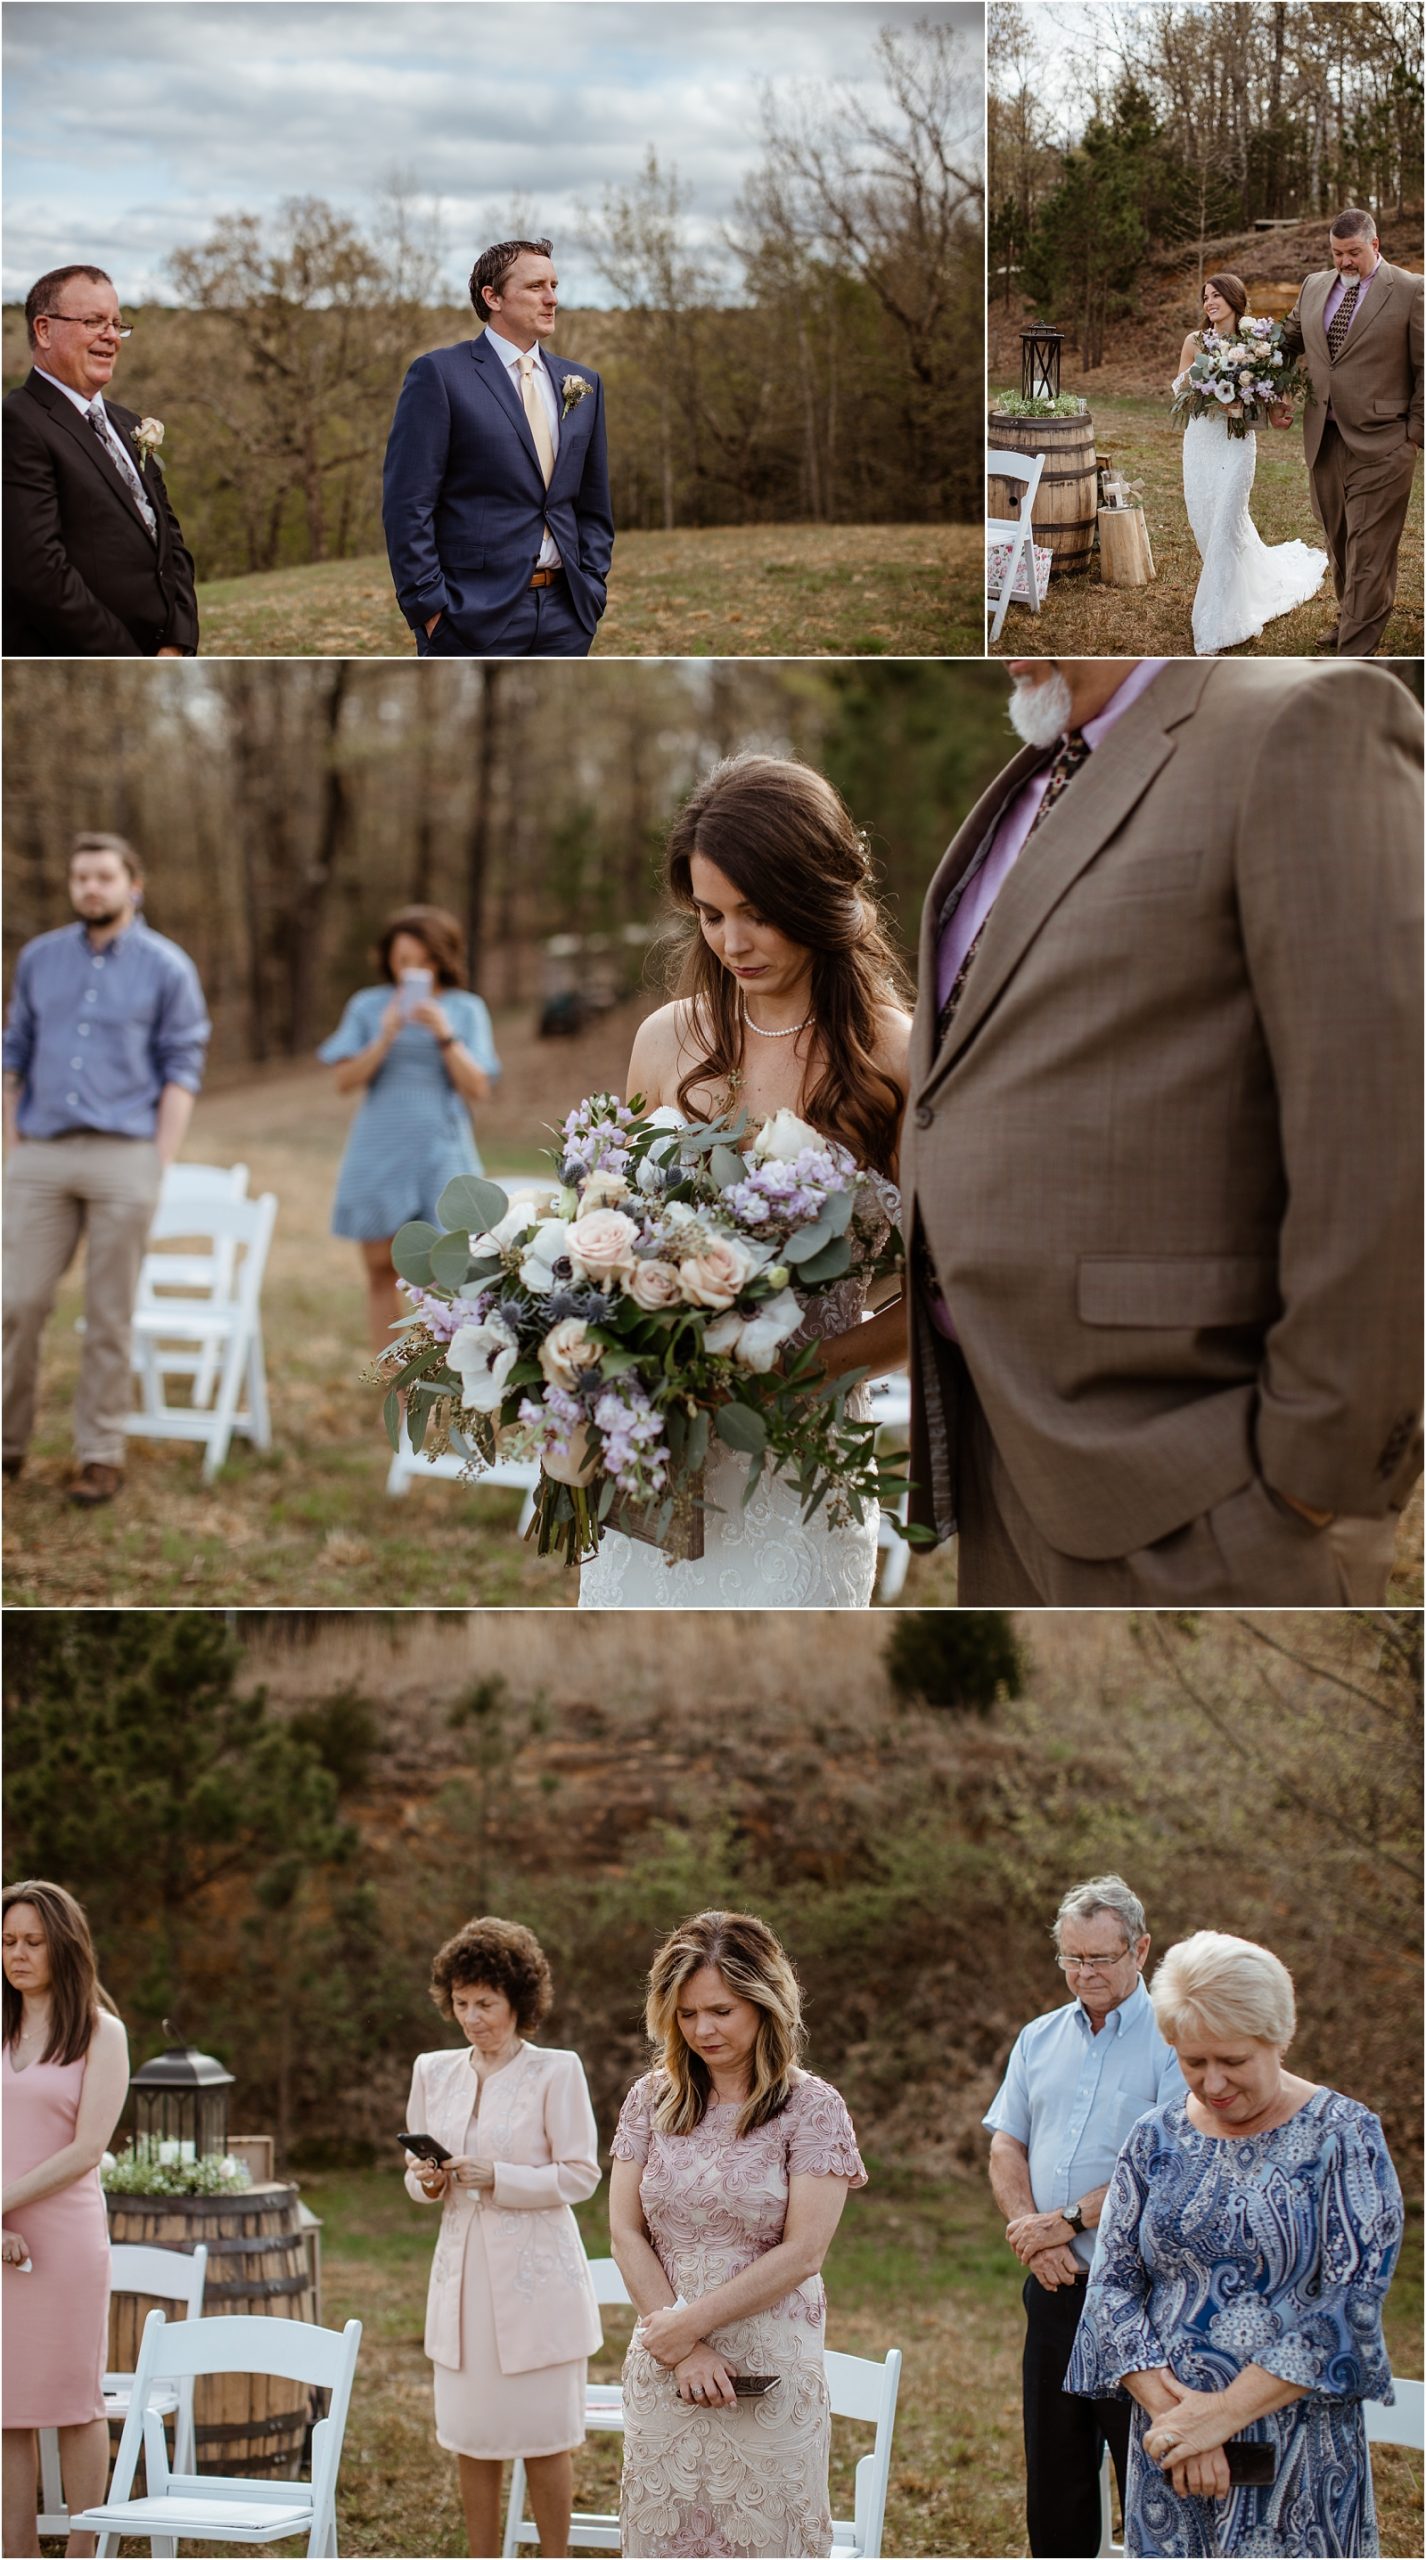 petit jean elopement, Little Rock elopement, Arkansas elopement, the Johnsons photo, lakeside elopement